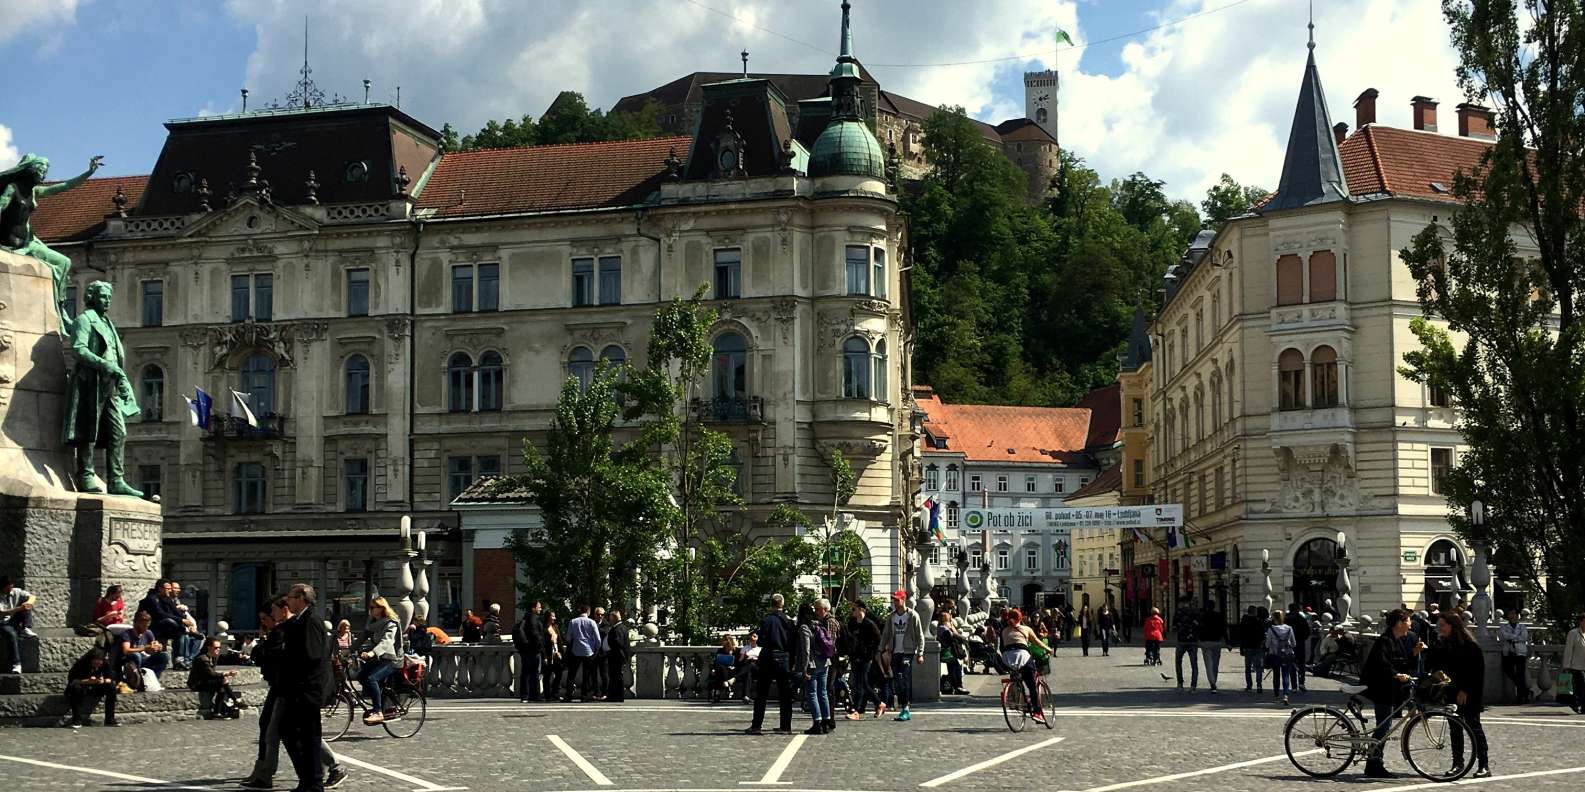 things to do in Ljubljana